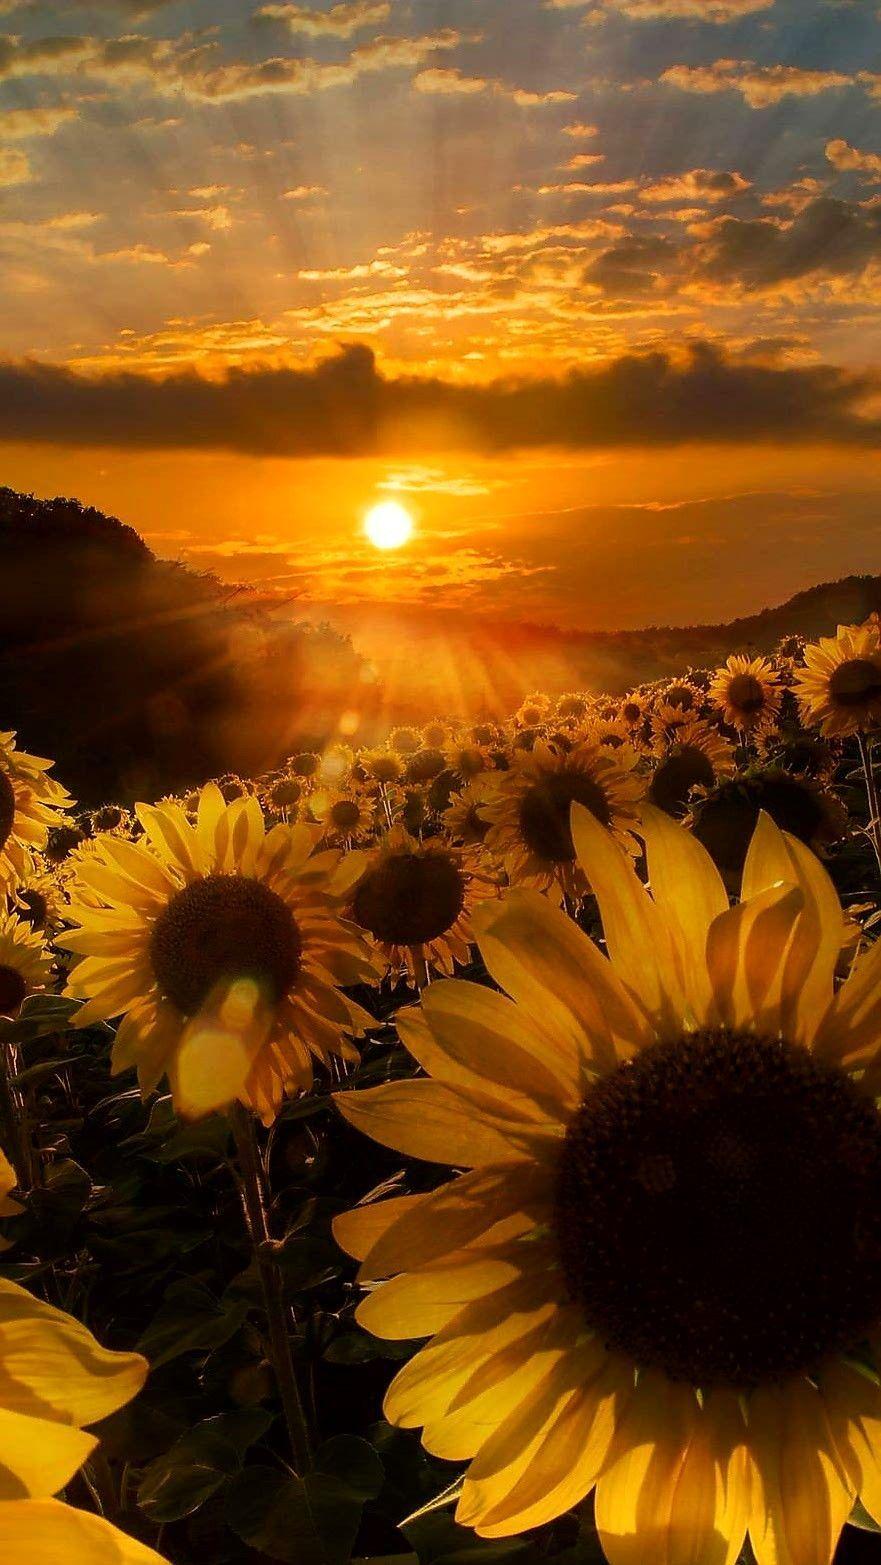 So beautiful, reminds me of Tim Coffey's 'Tuscan Sunflowers